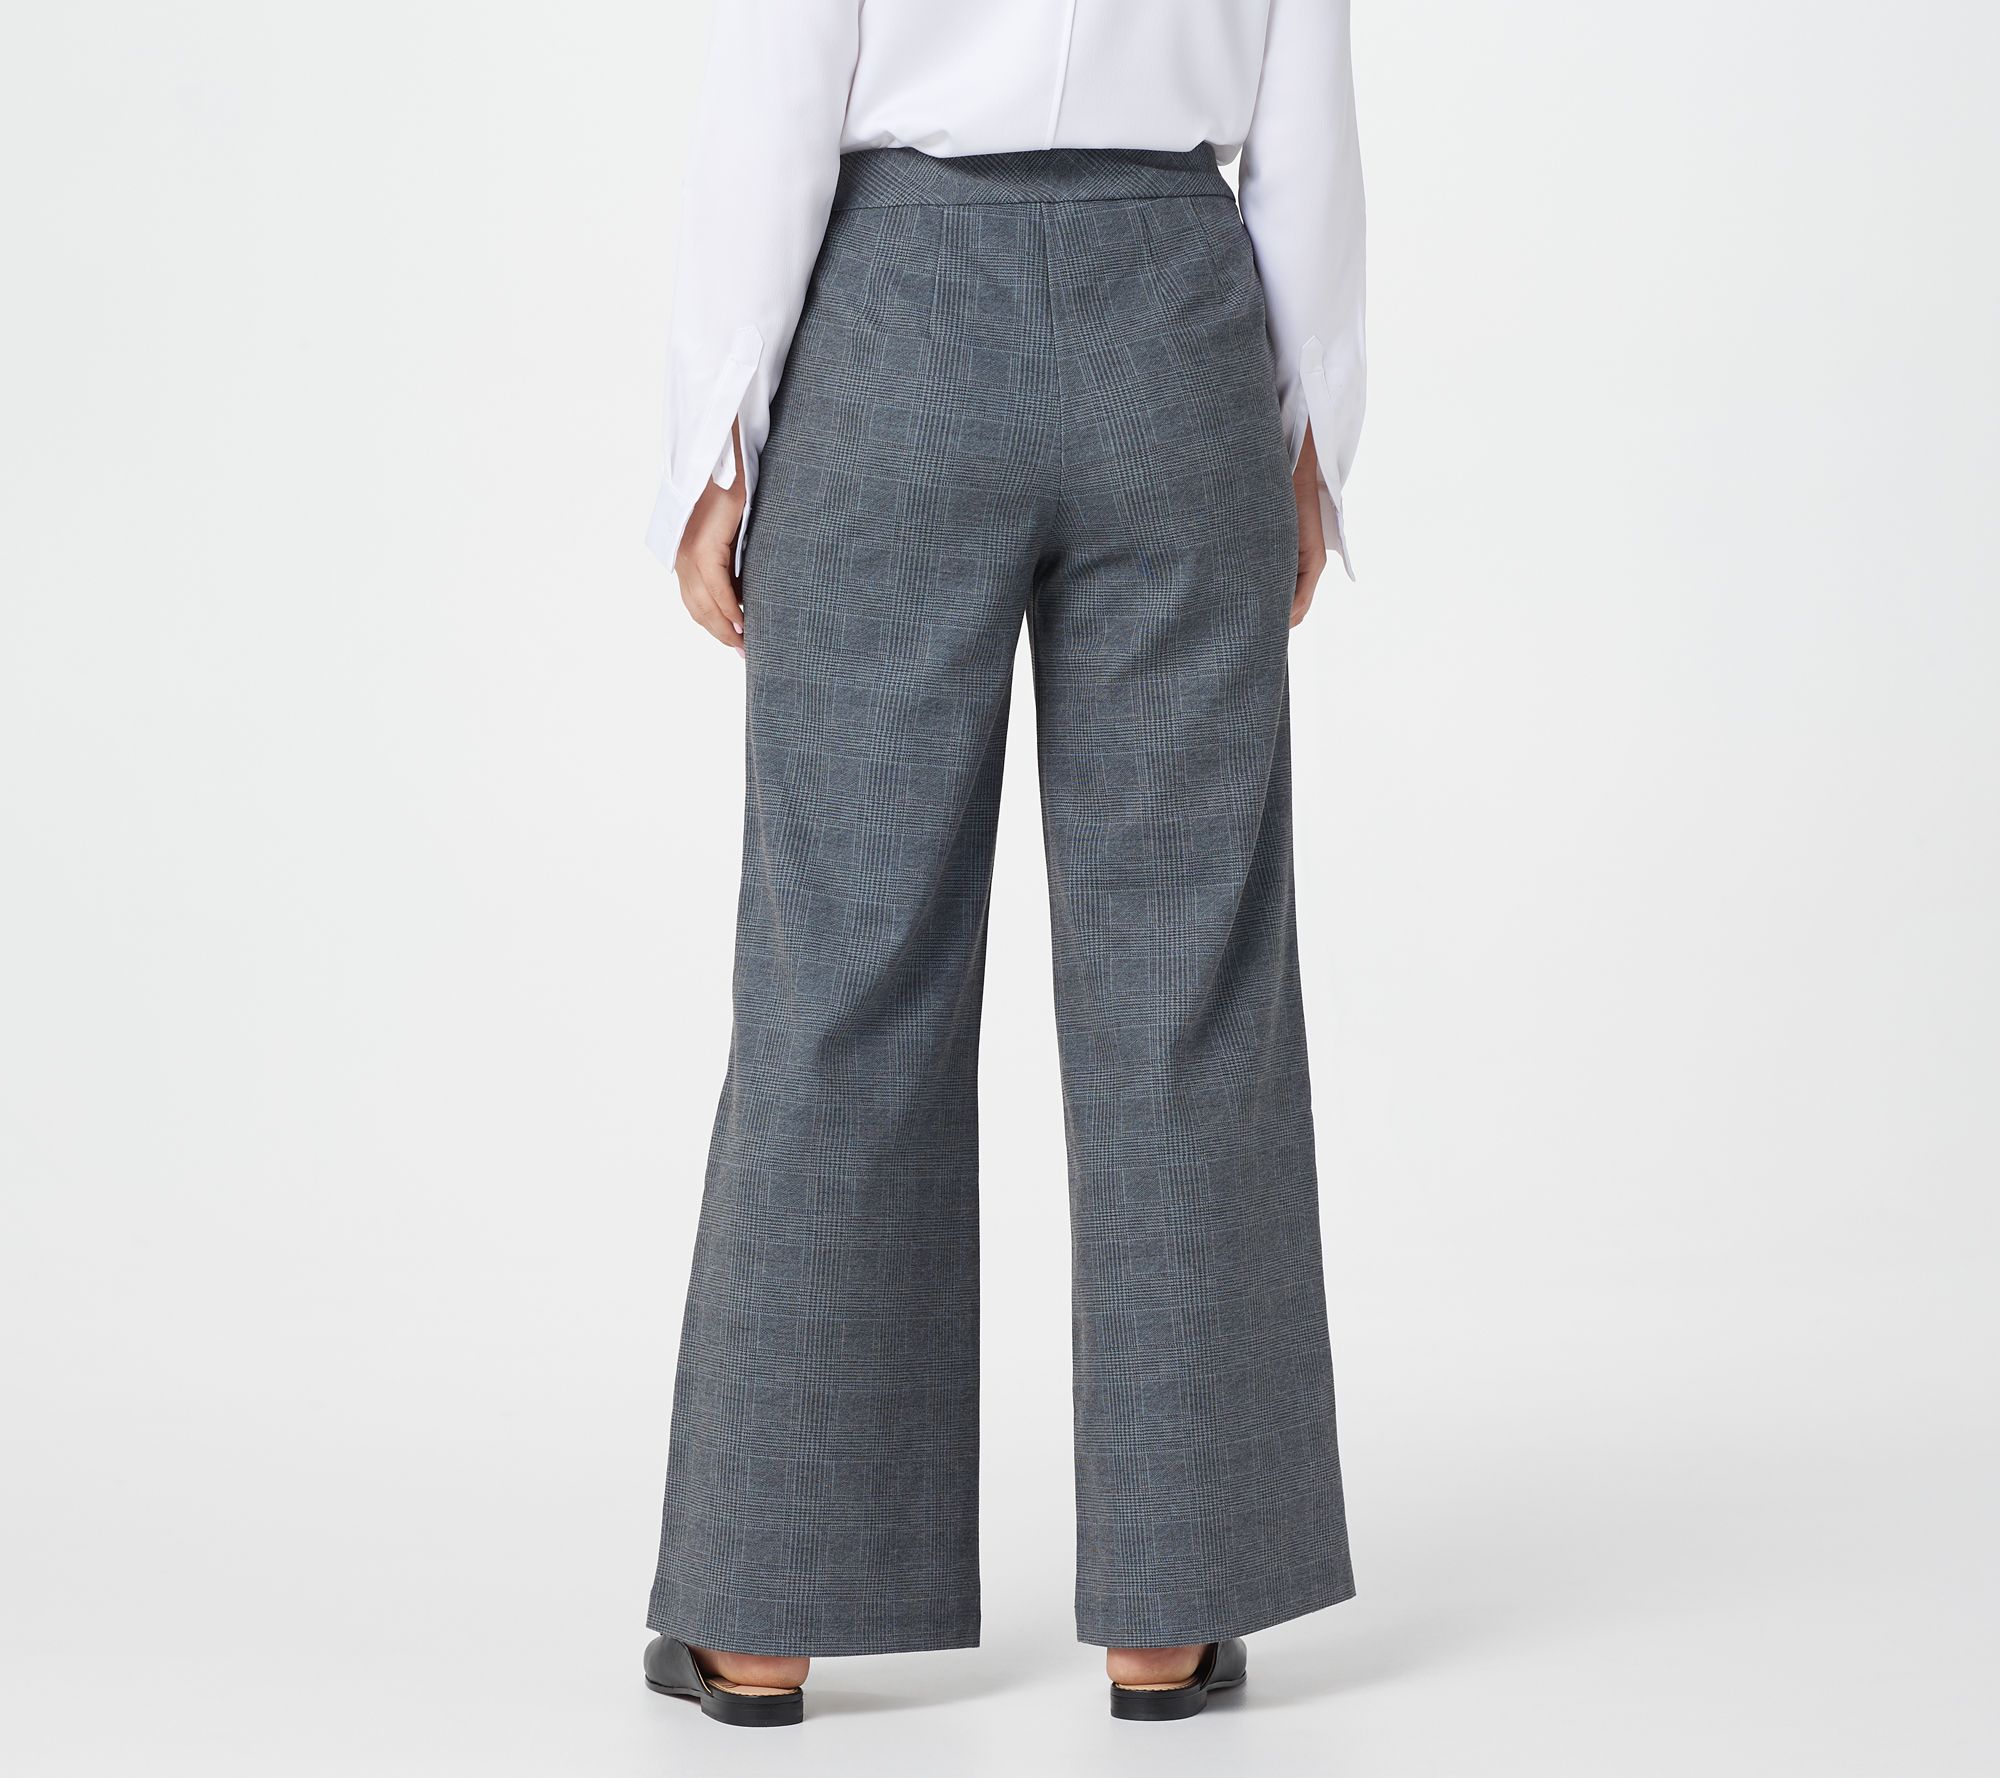 Joan Rivers Regular Plaid Pull-On Full Length Pants - QVC.com